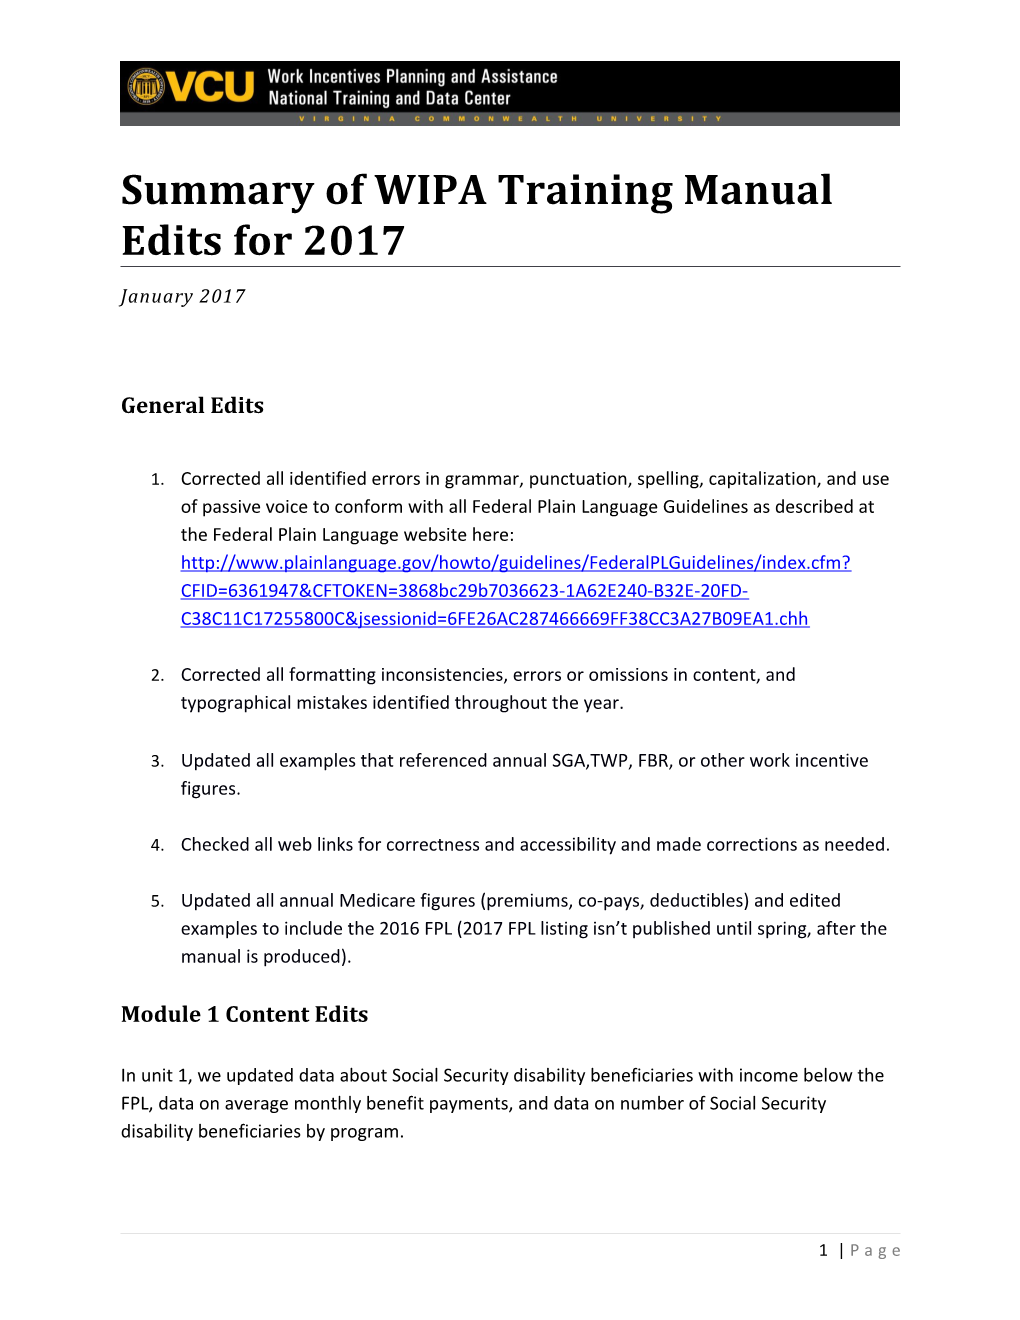 Summary of WIPA Training Manual Edits for 2017